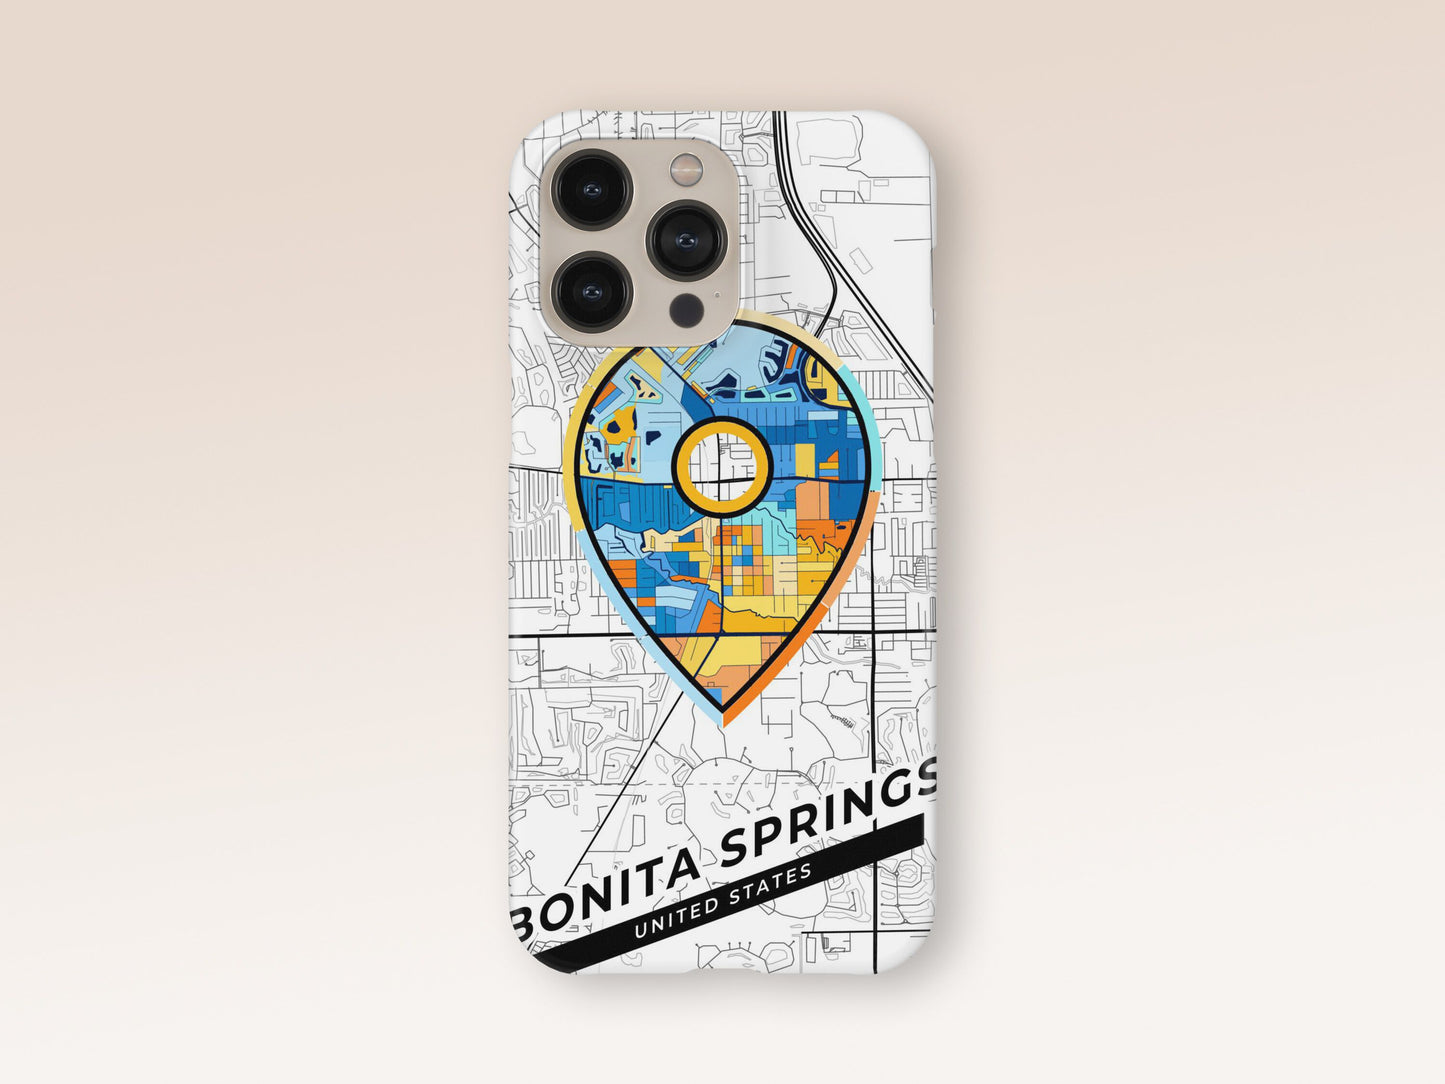 Bonita Springs Florida slim phone case with colorful icon. Birthday, wedding or housewarming gift. Couple match cases. 1